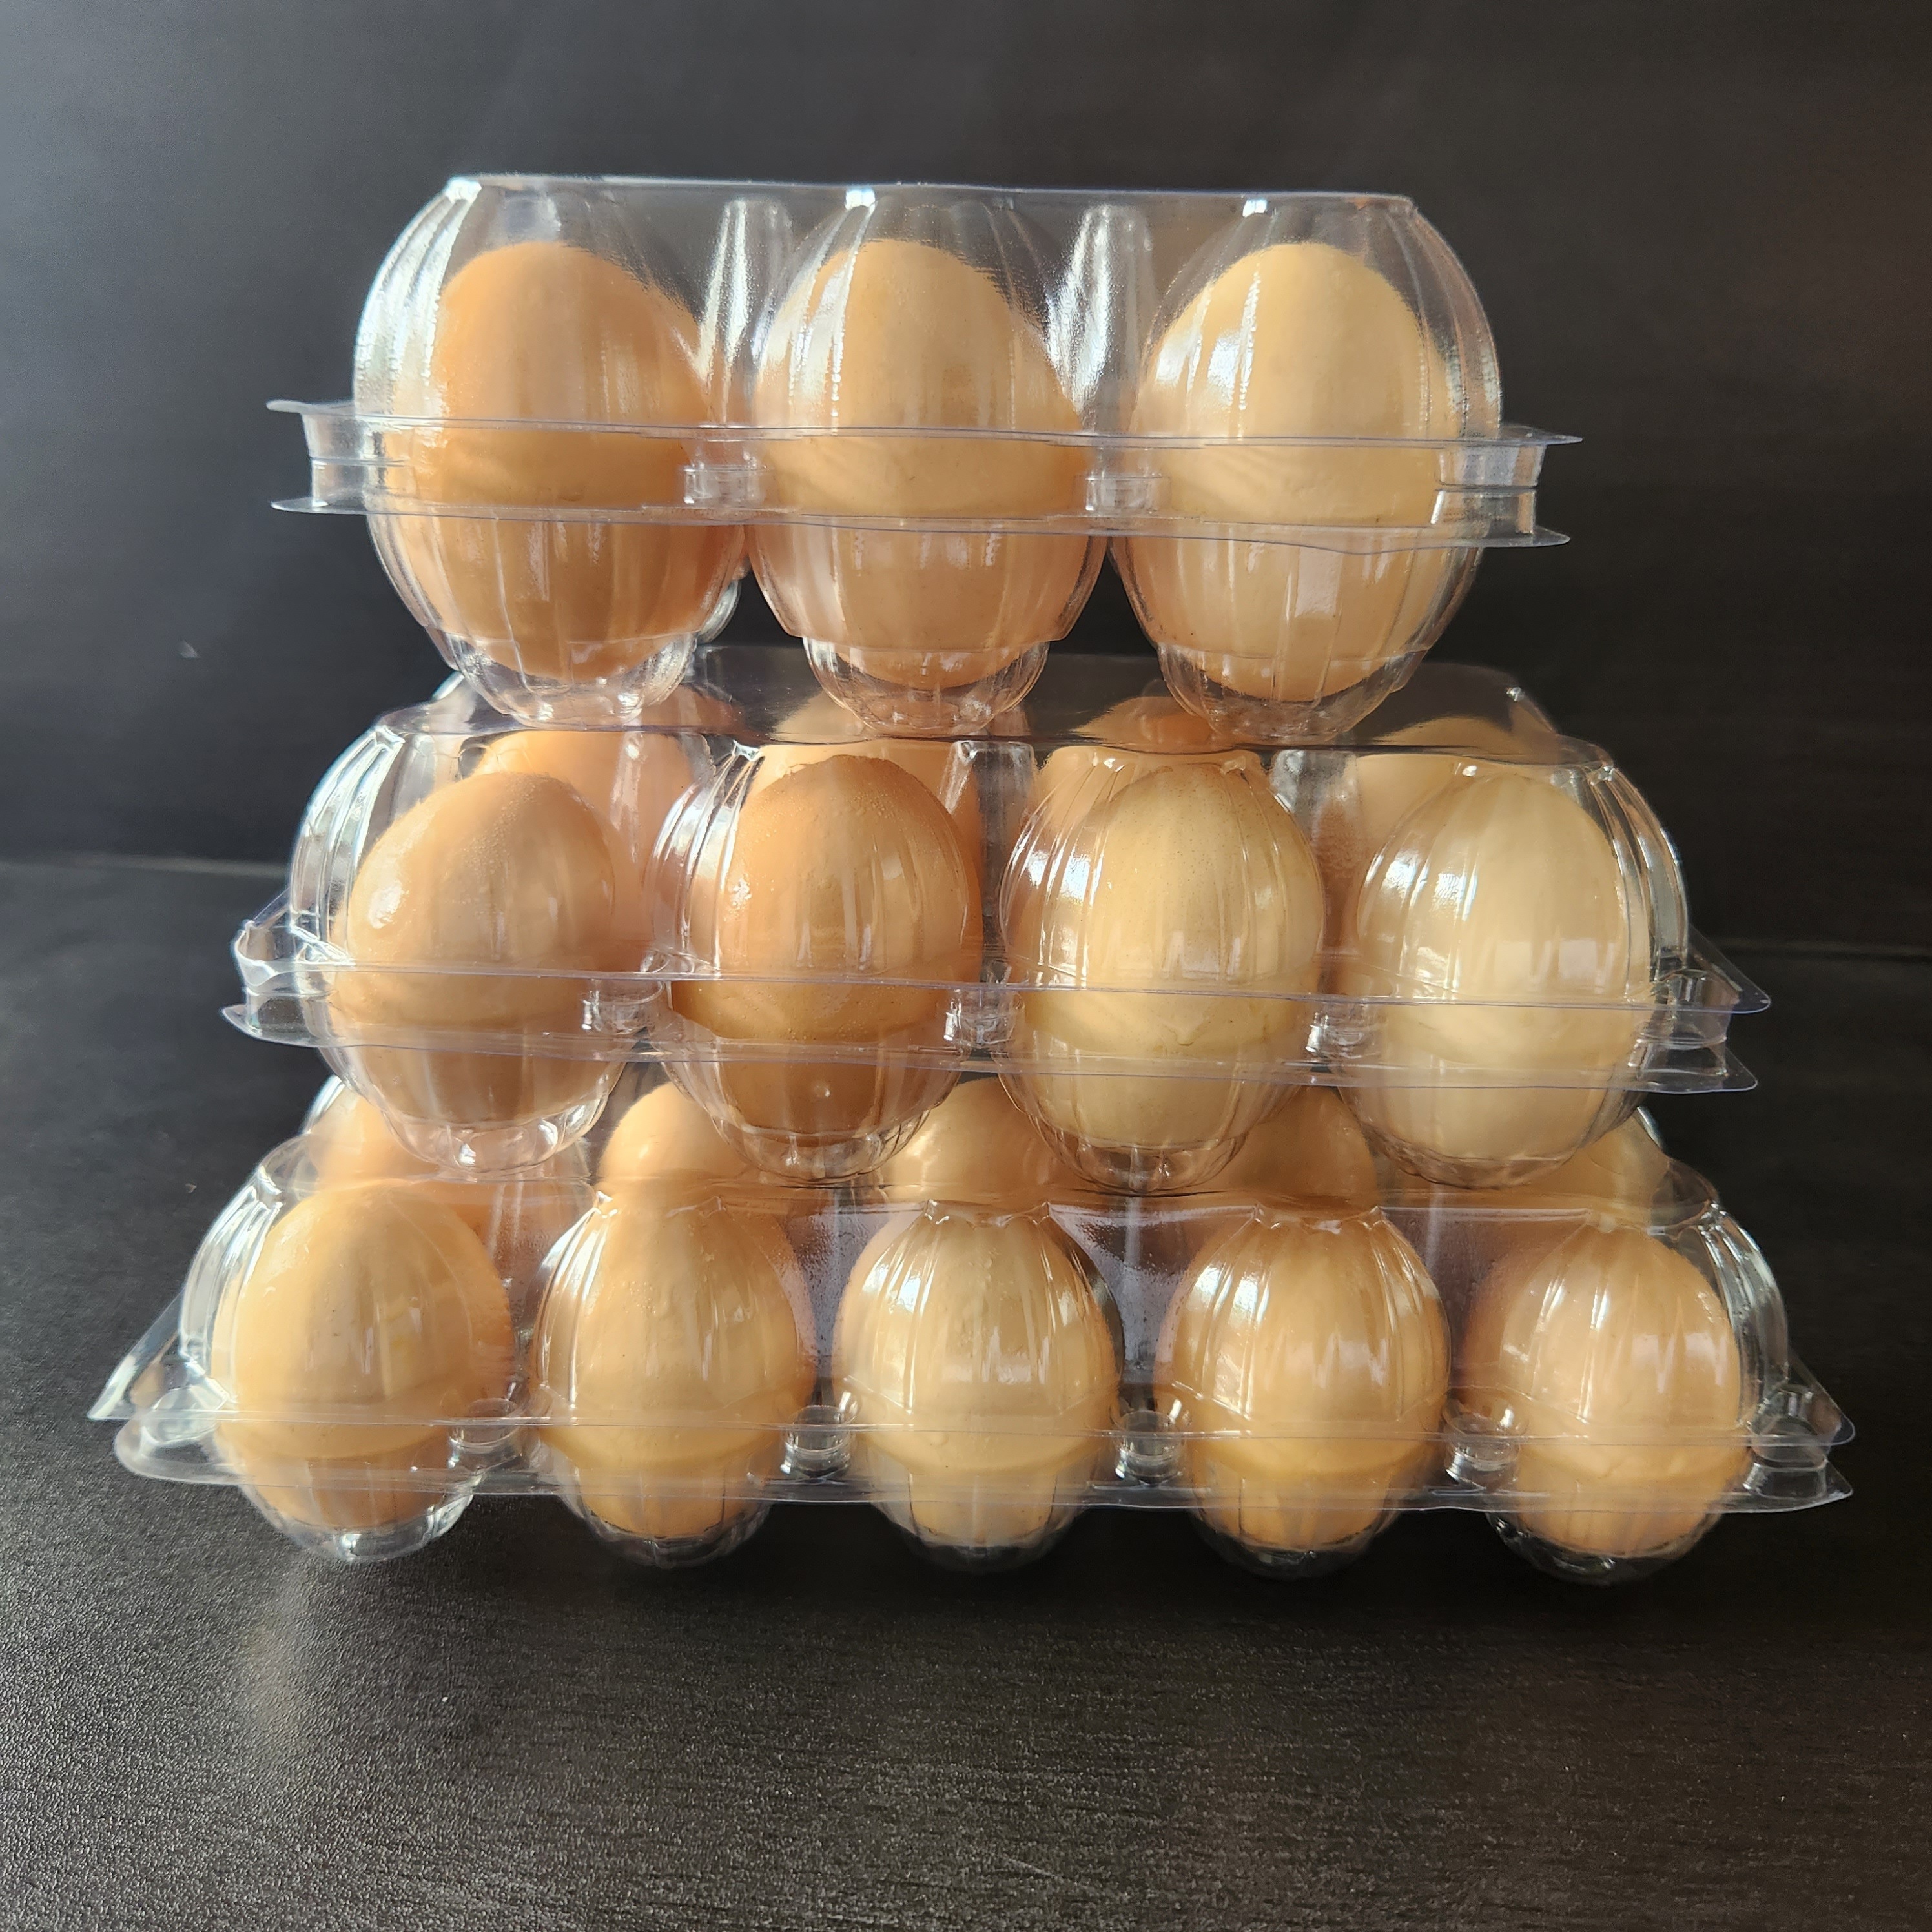 40 Pack Plastic Egg Cartons Cheap Bulk,1 Dozen Clear Empty Egg Cartons for  Chicken Eggs 2x6 Grids,Reusable Egg Carton for Family, Chicken Farm